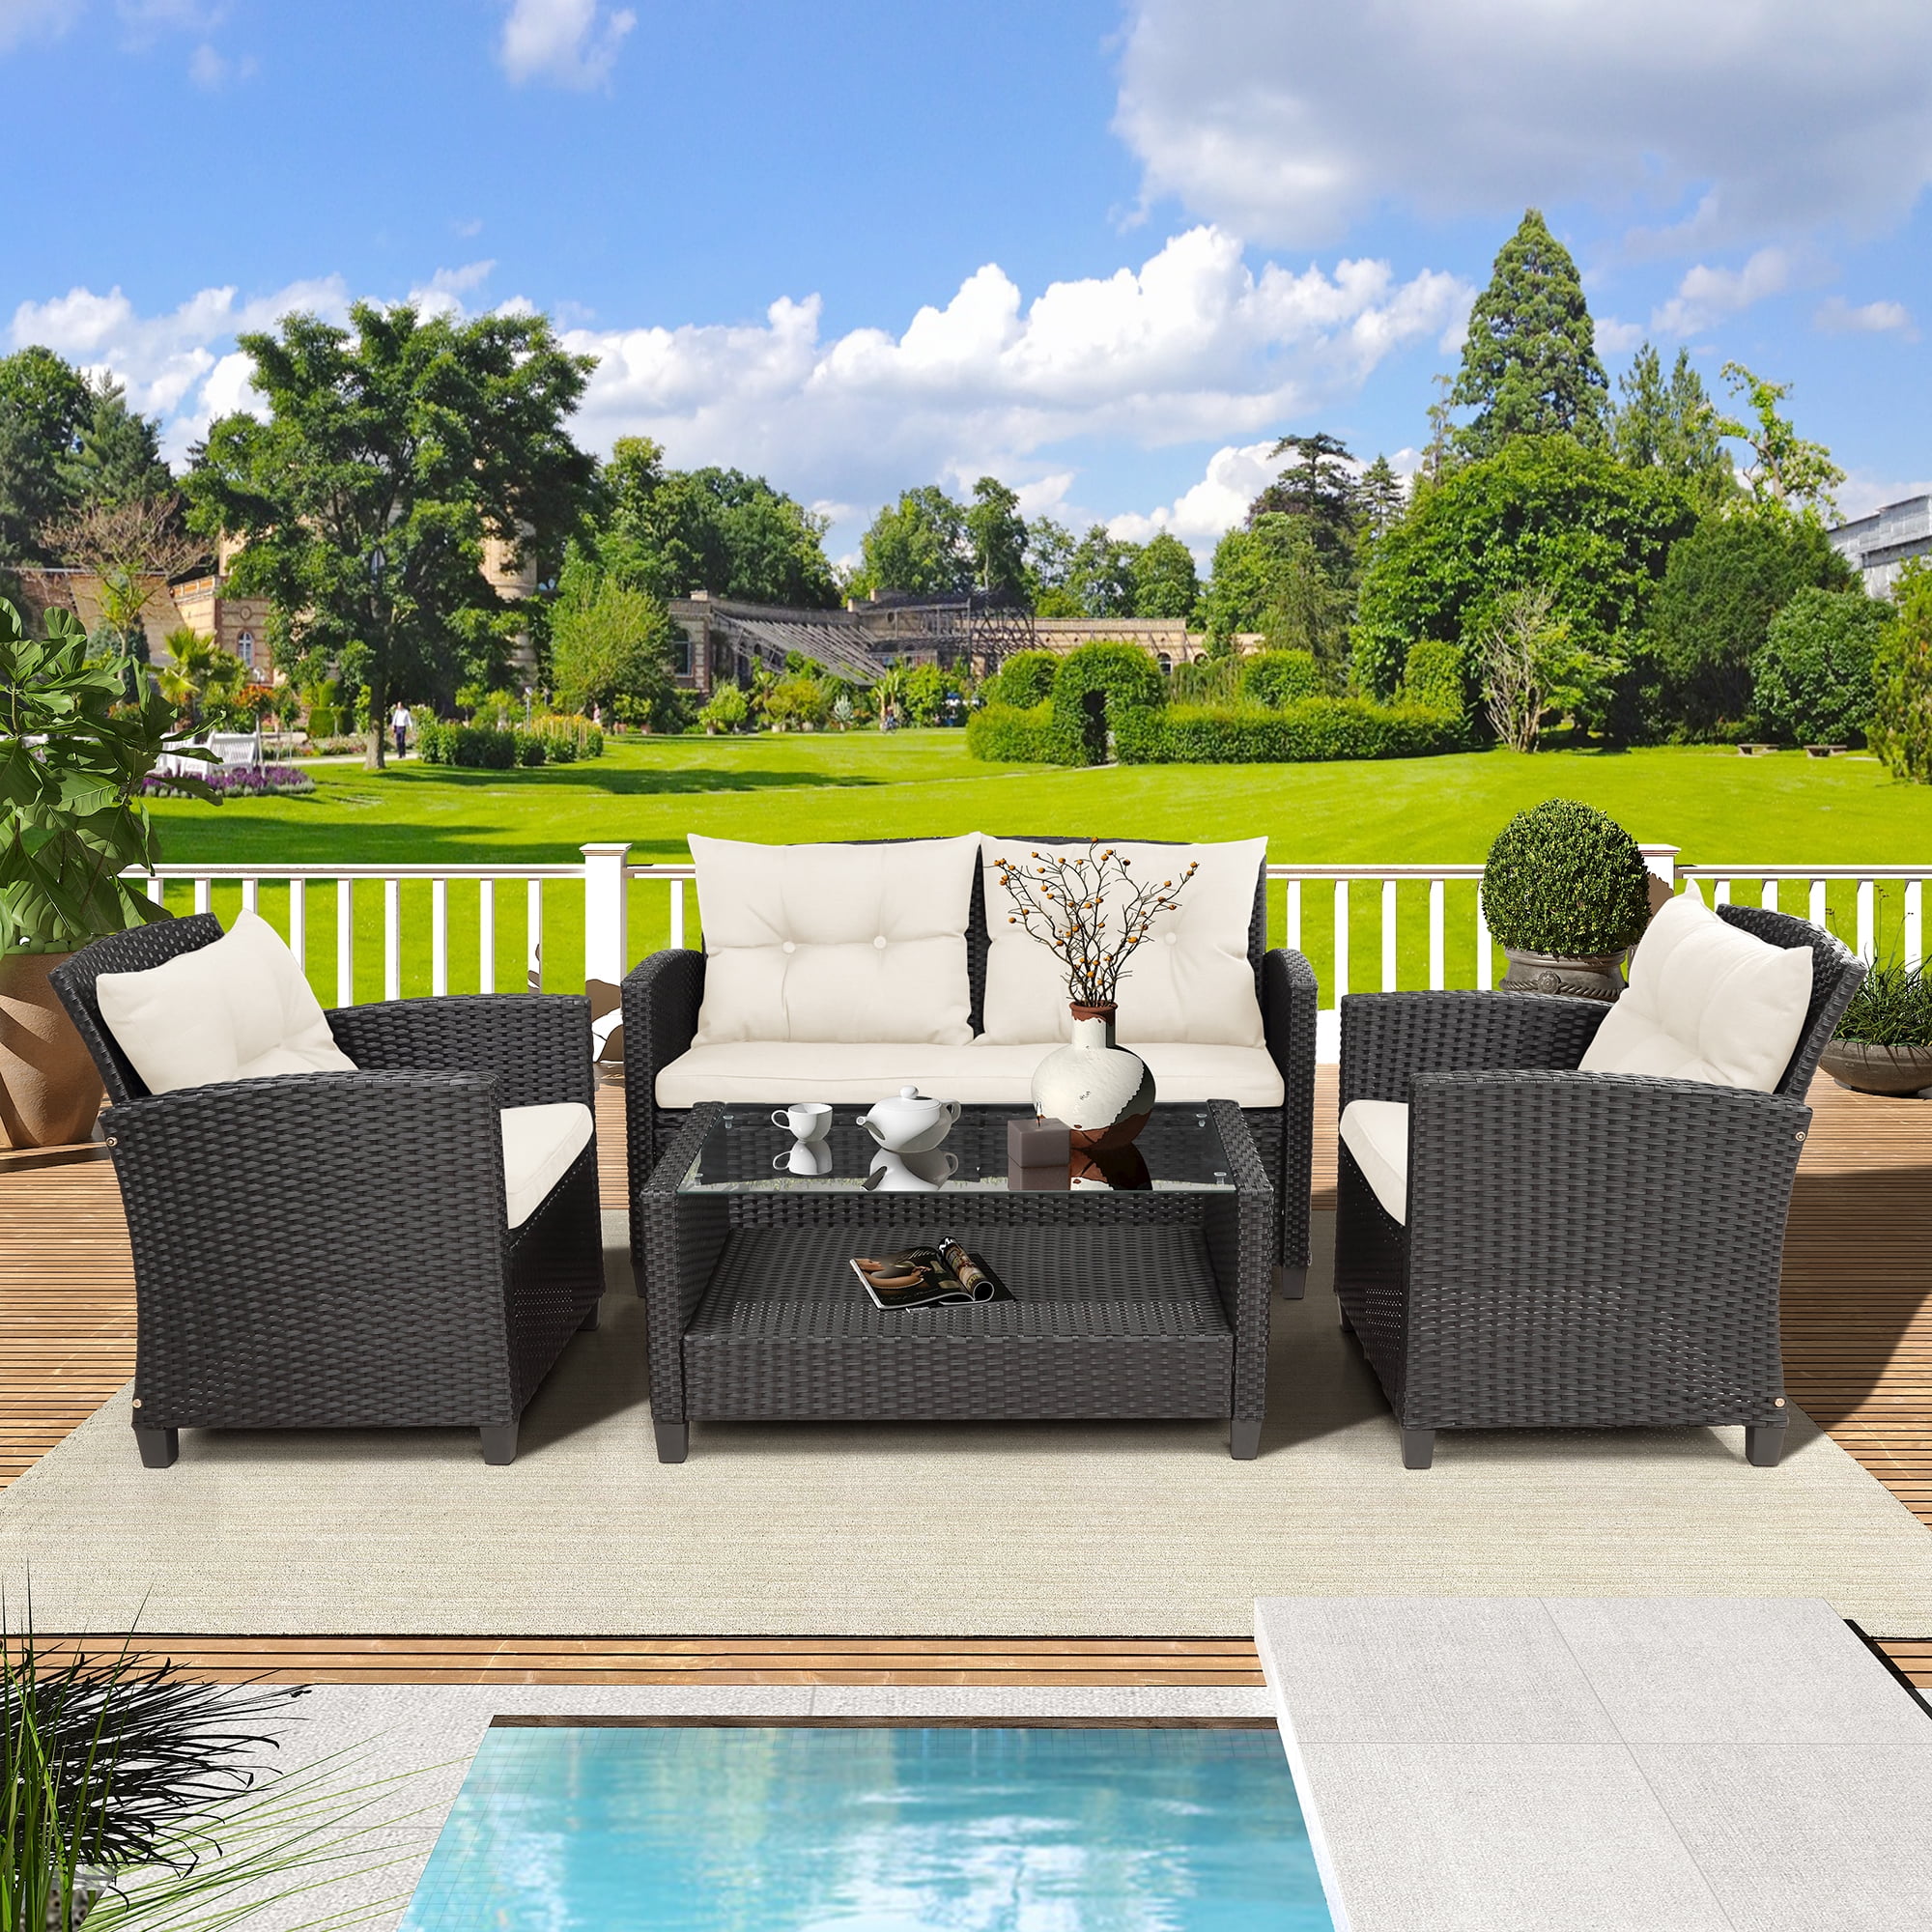 Details about   4 PCS Patio Furniture Set Wicker Sofa Set Outdoor Garden Beige Cushions Modern 